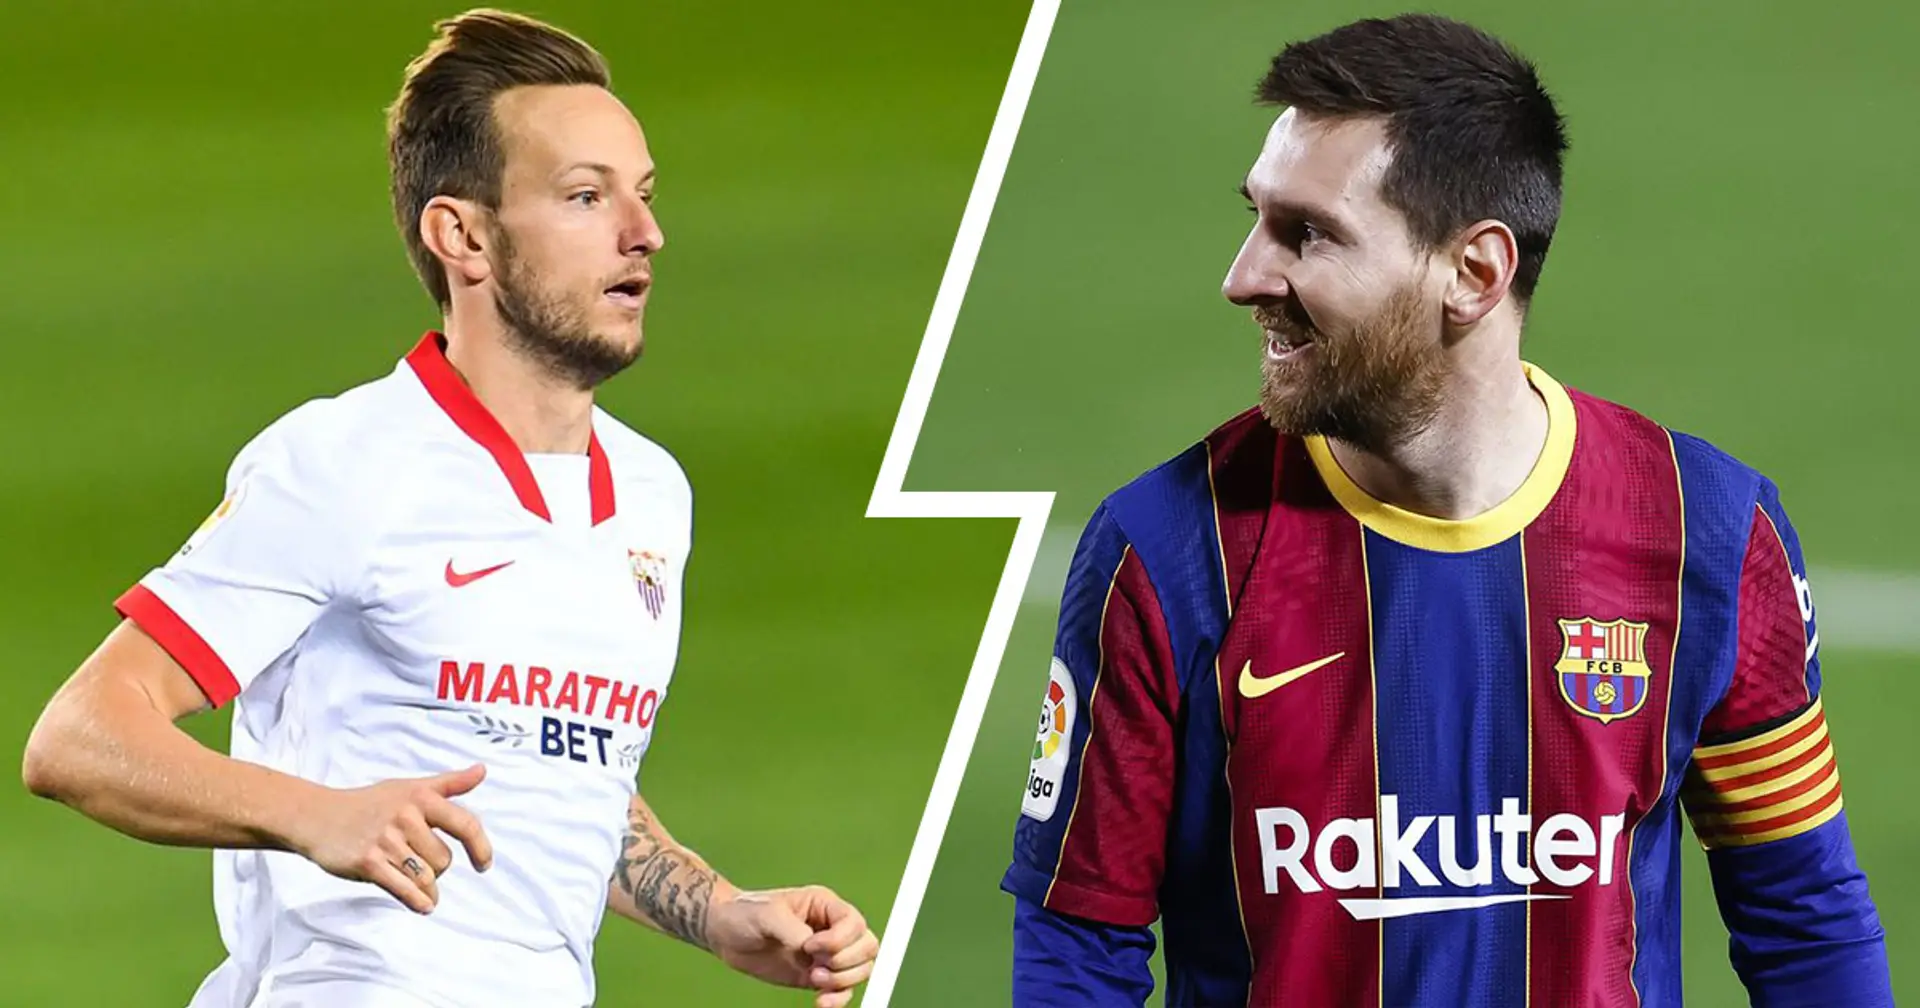 Sevilla vs Barcelona: team news, probable lineups, score predictions and more – preview